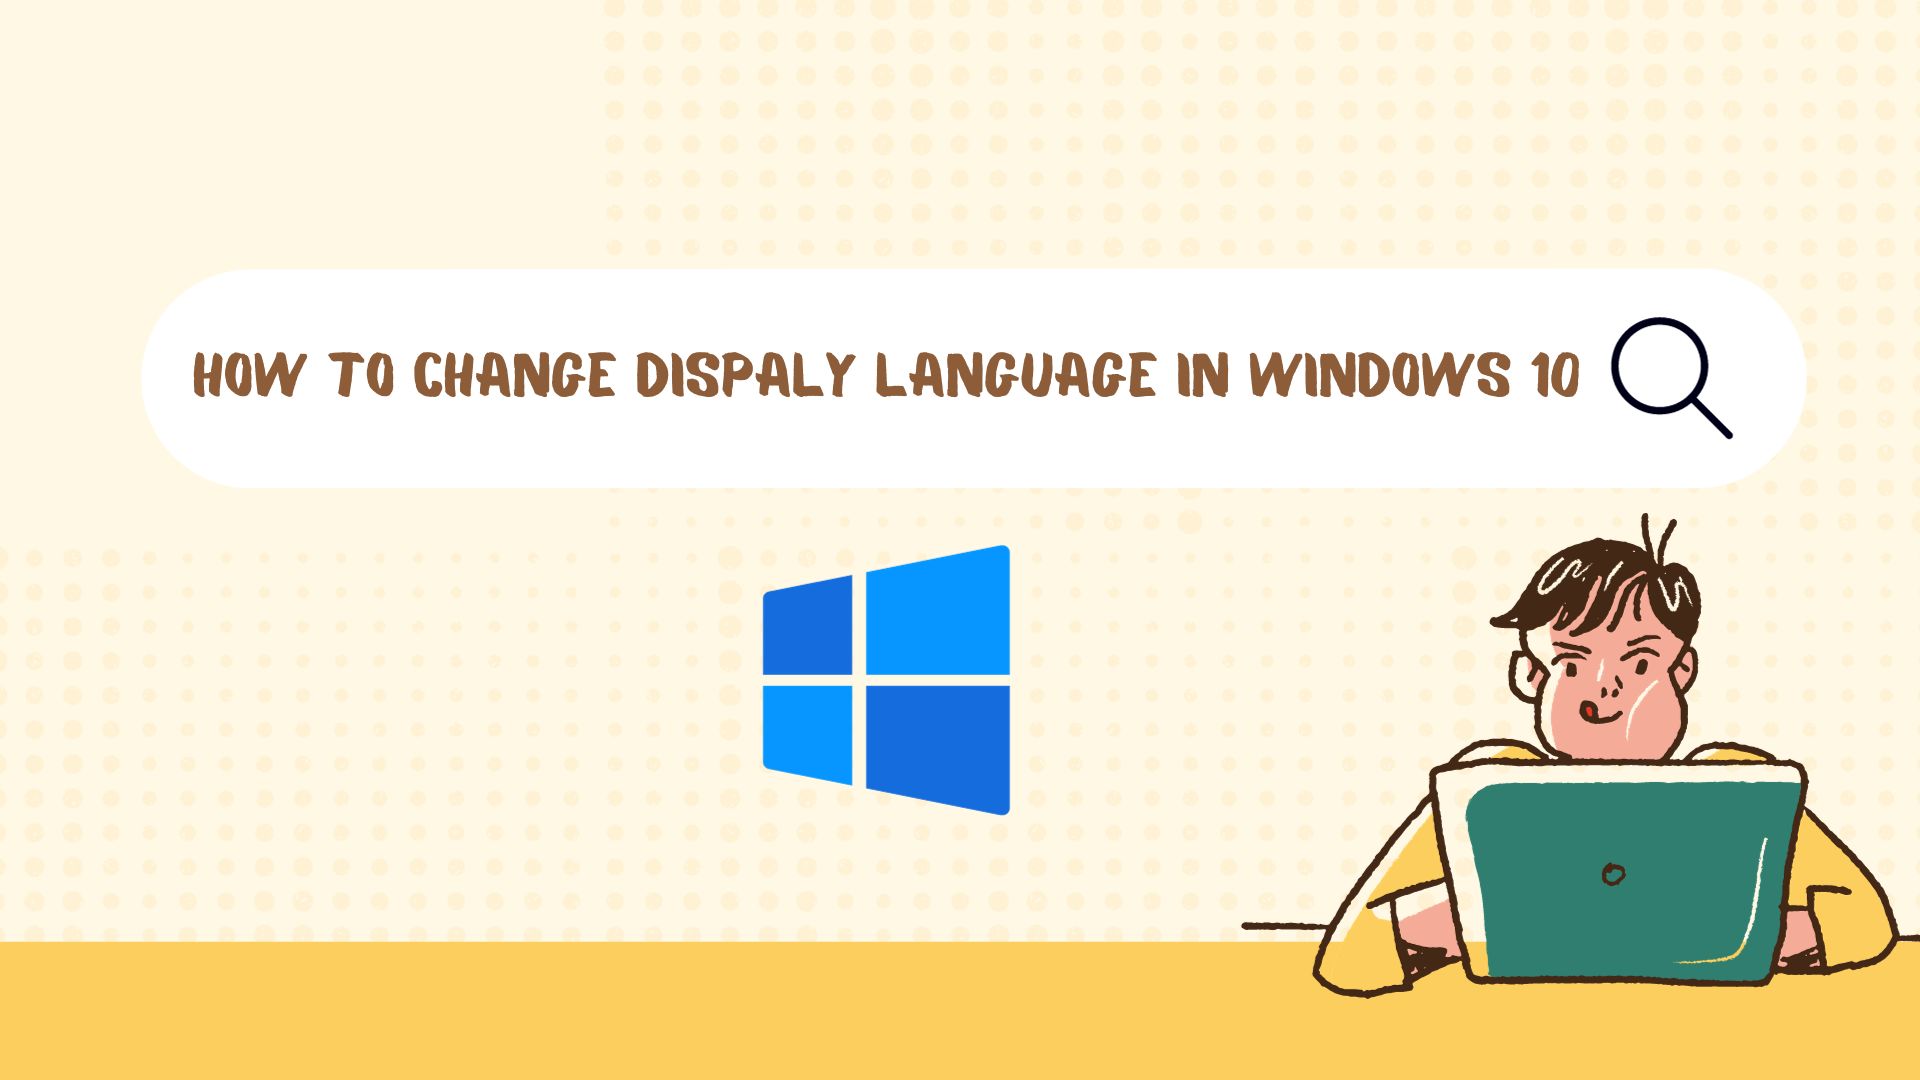 Steps to Change Display Language in Windows 10 Using PowerShell